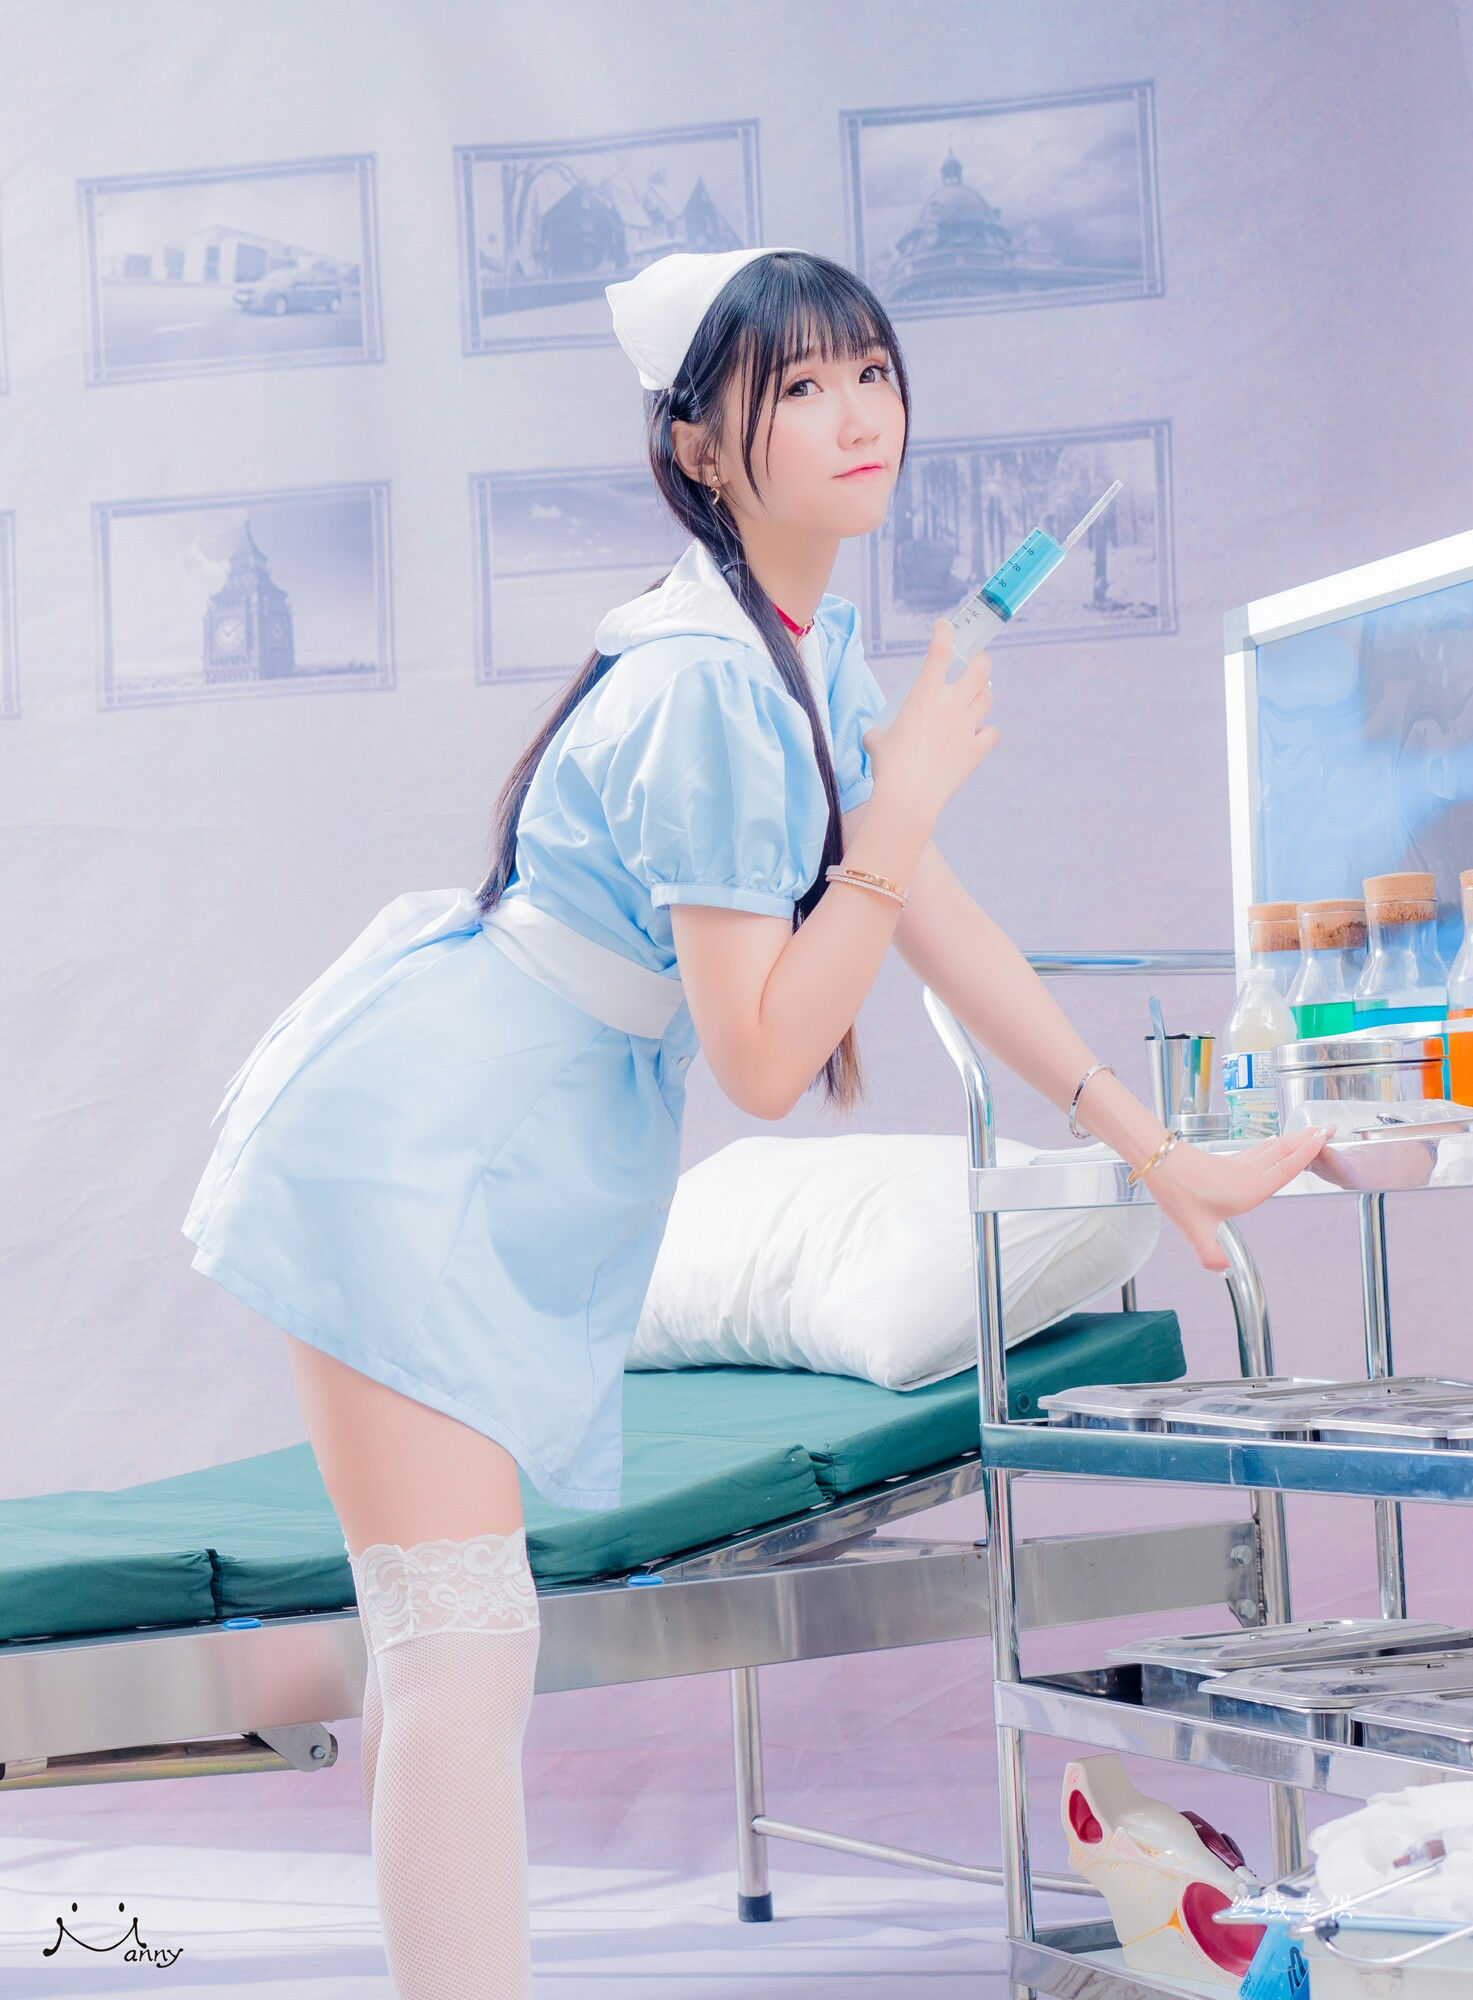 фото азиаток медсестер фото 20